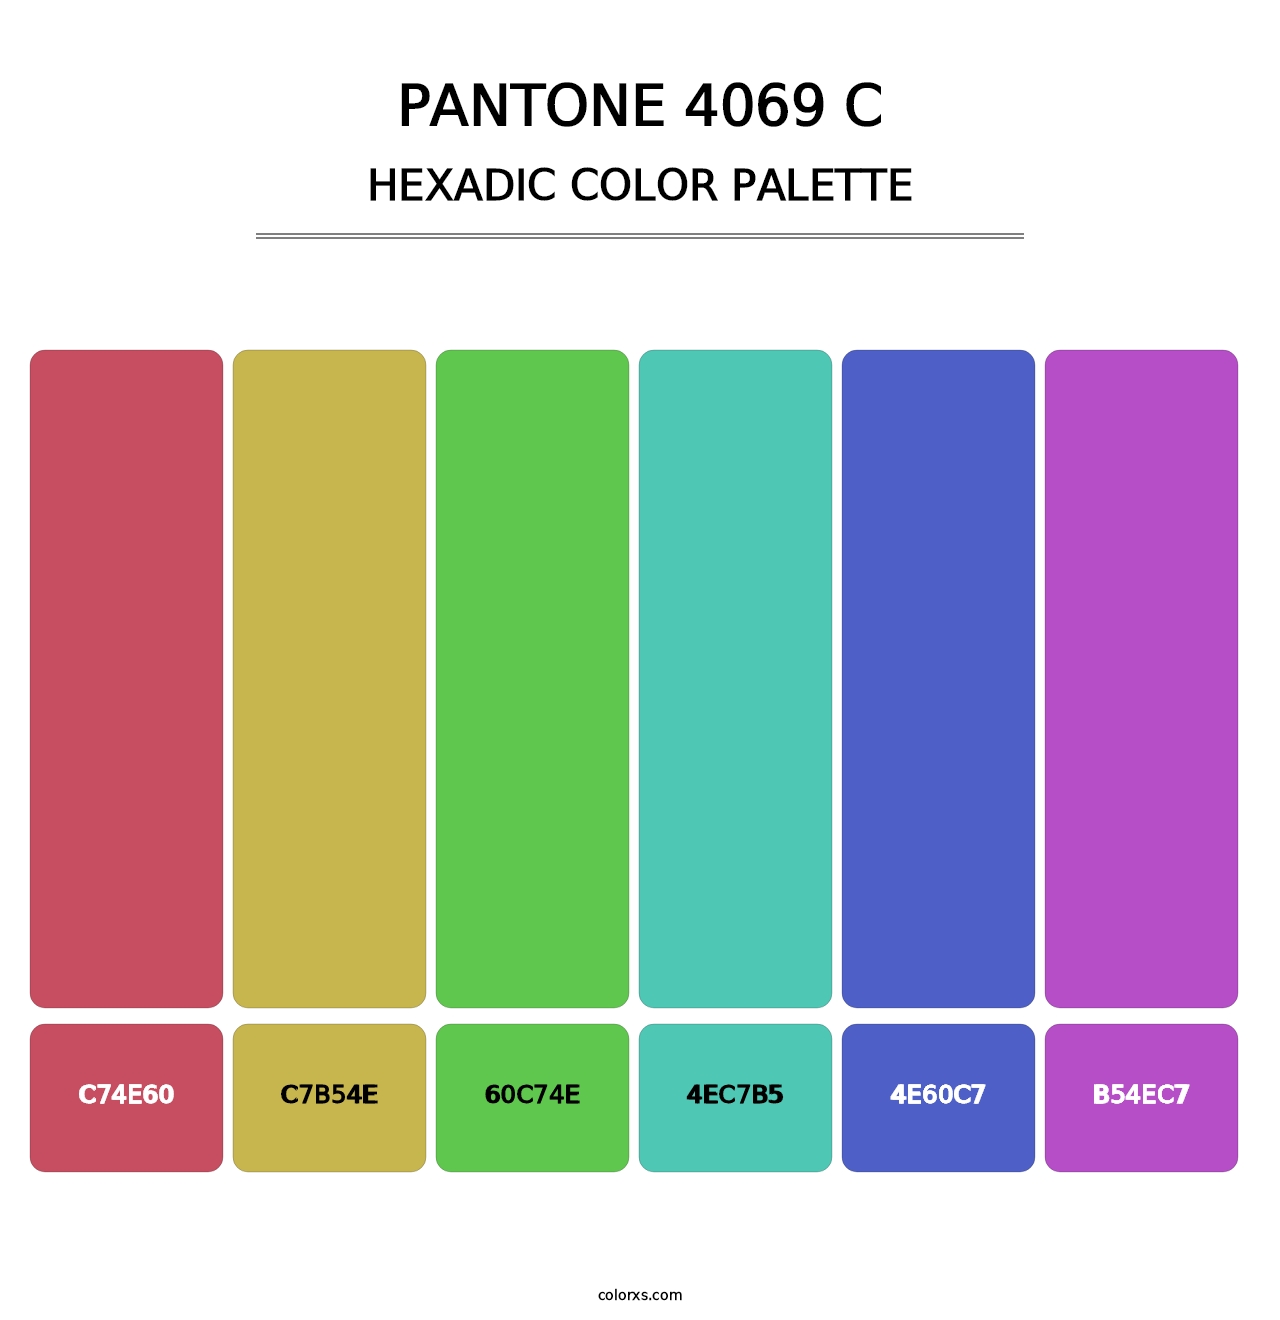 PANTONE 4069 C - Hexadic Color Palette